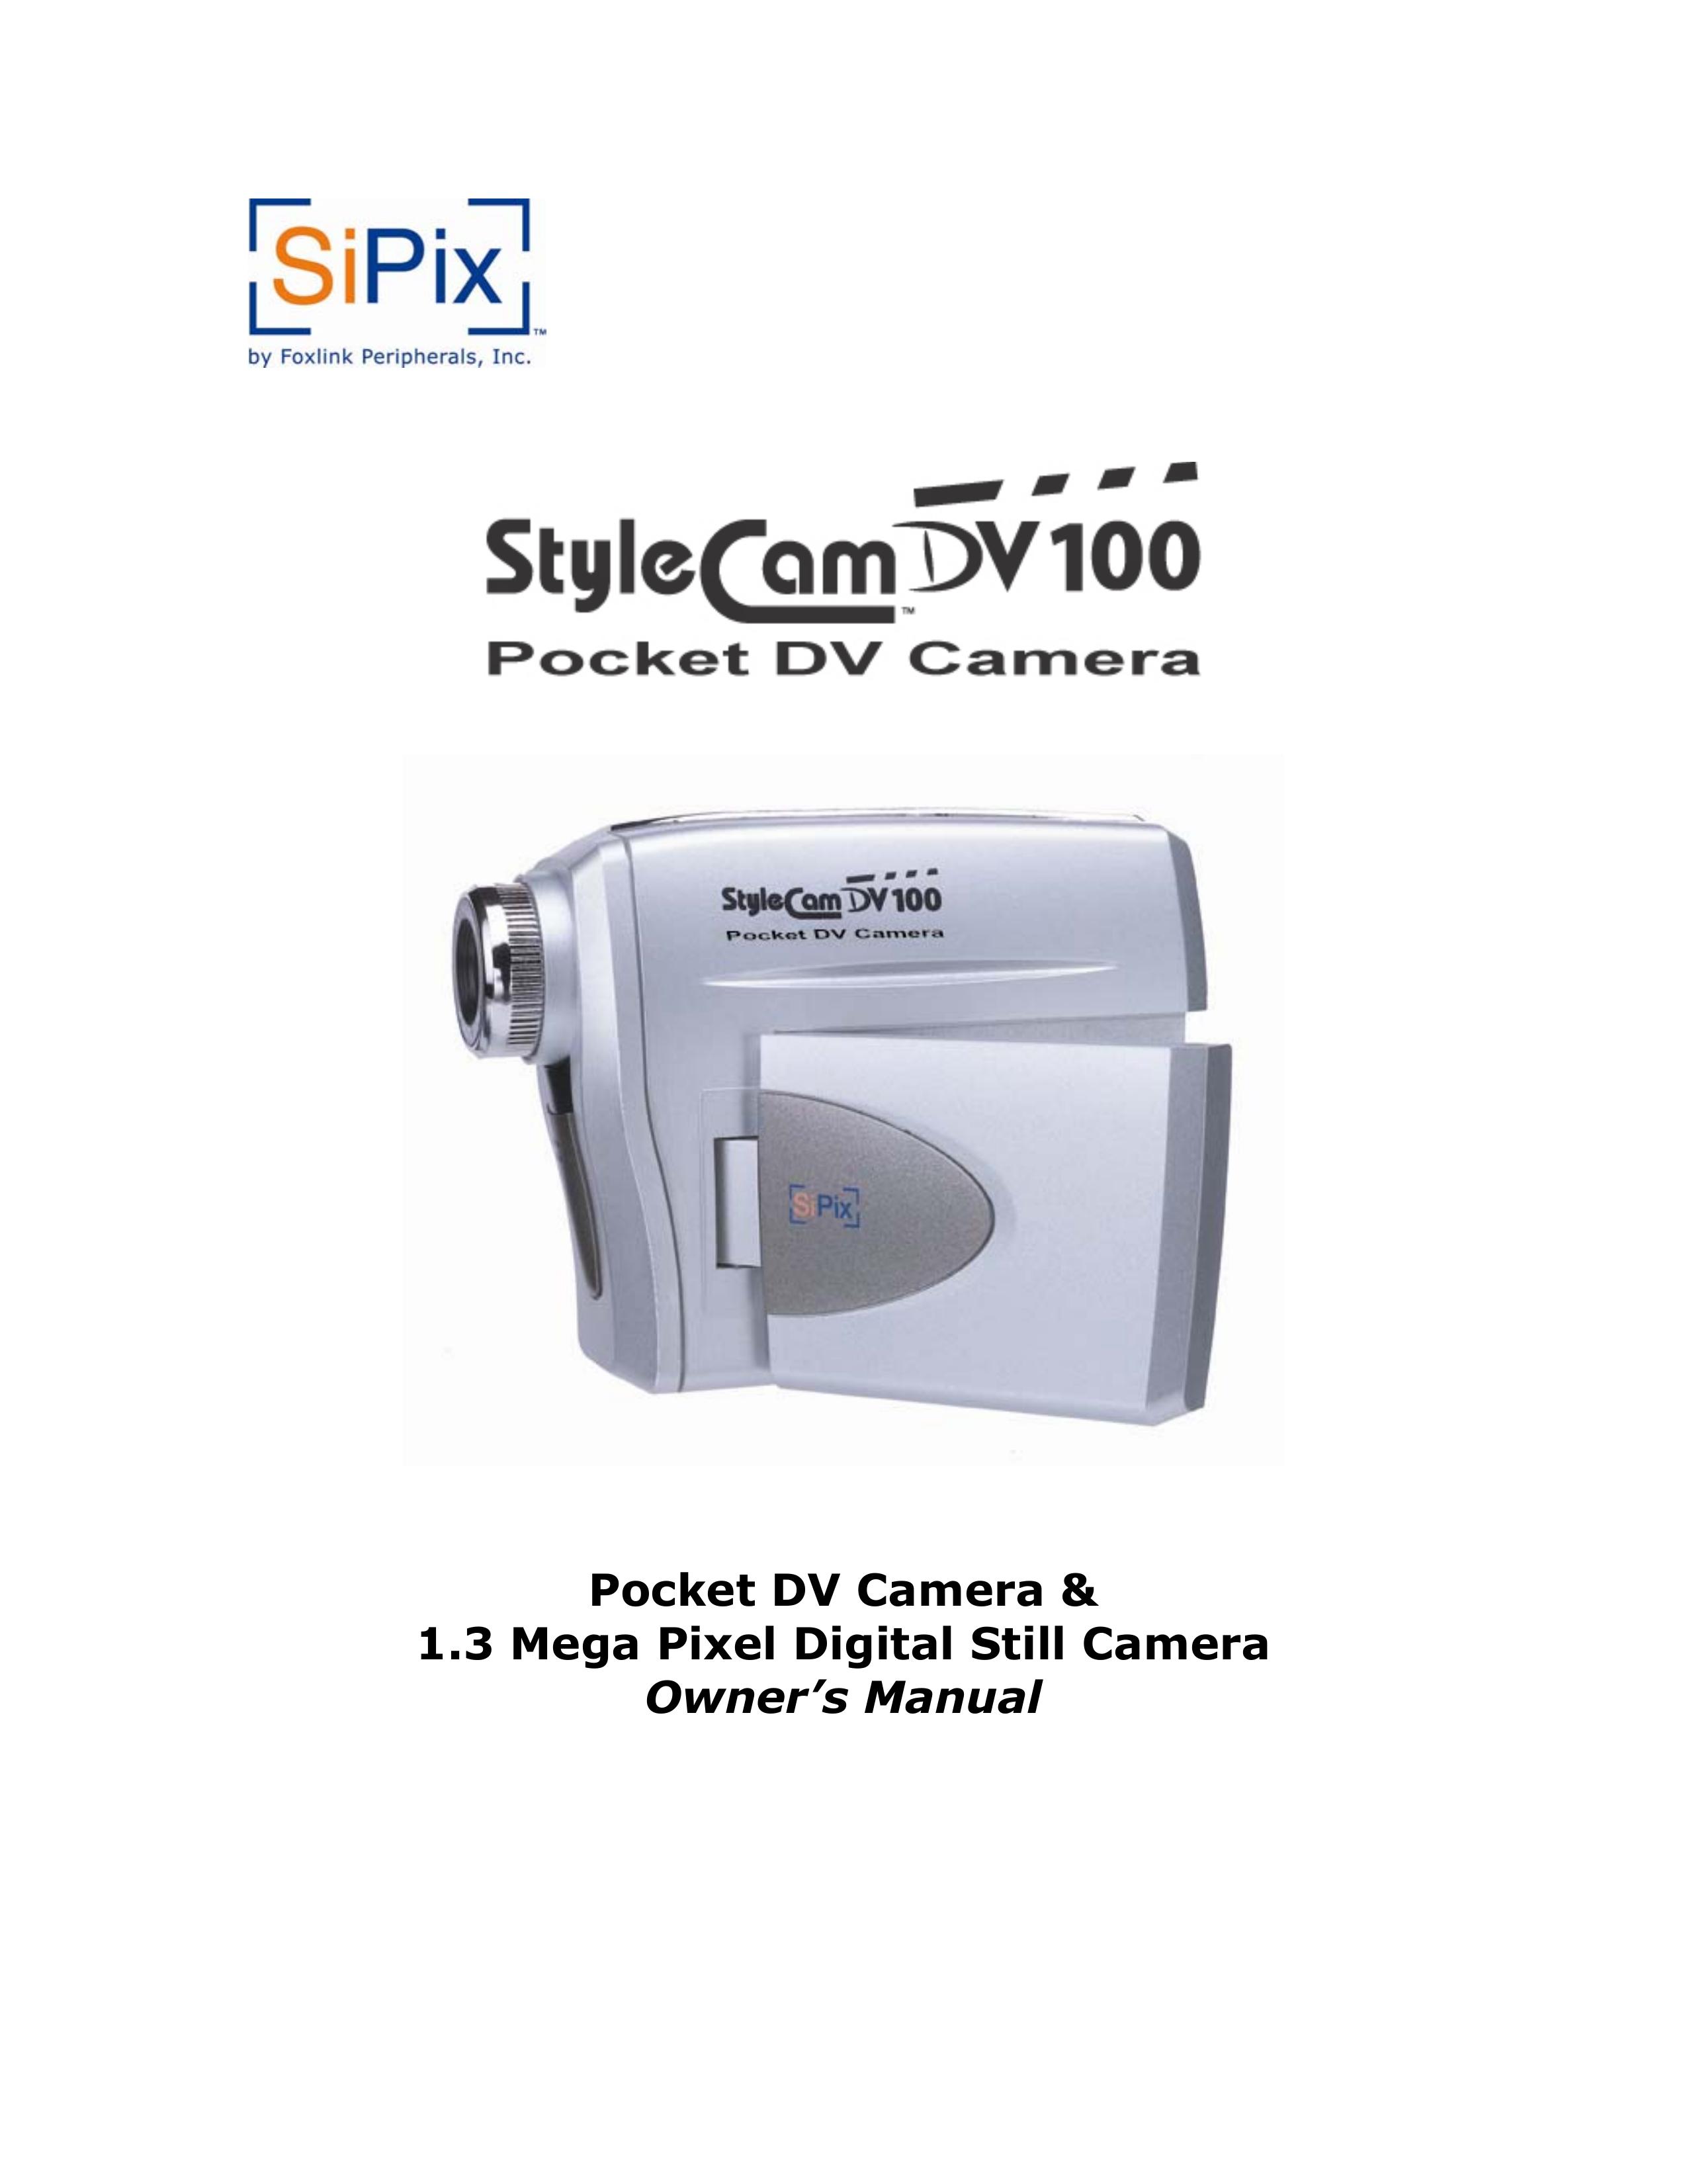 SiPix DV100 Film Camera User Manual